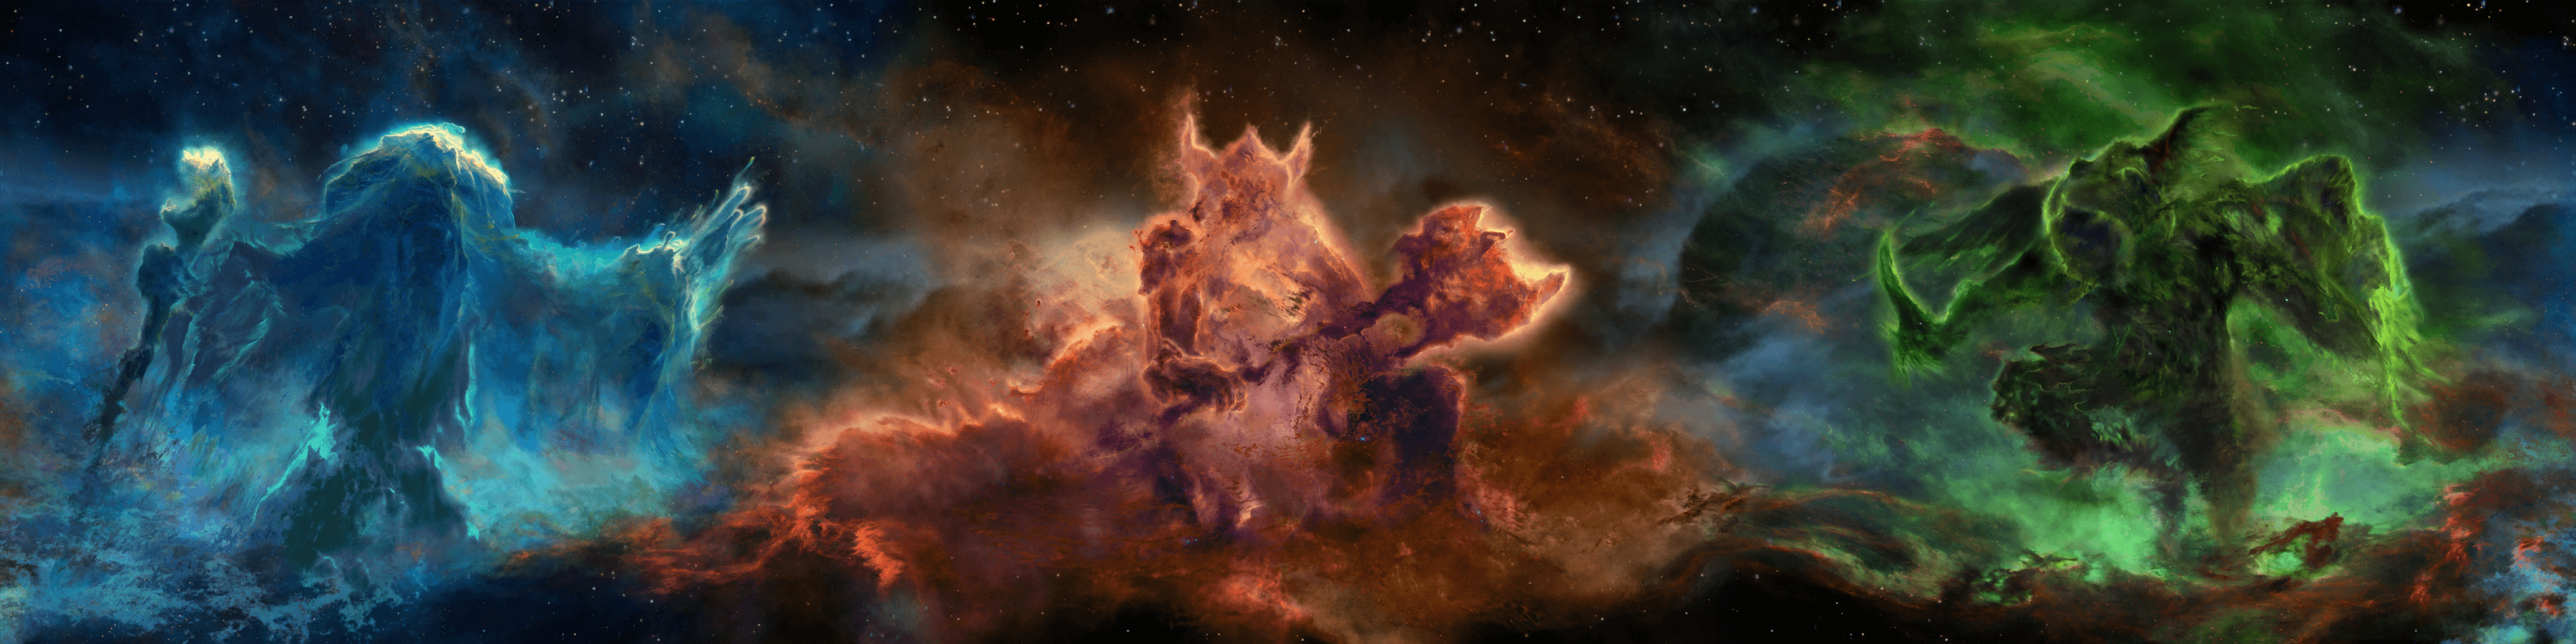 The Skill Tree Nebula Wallpaper